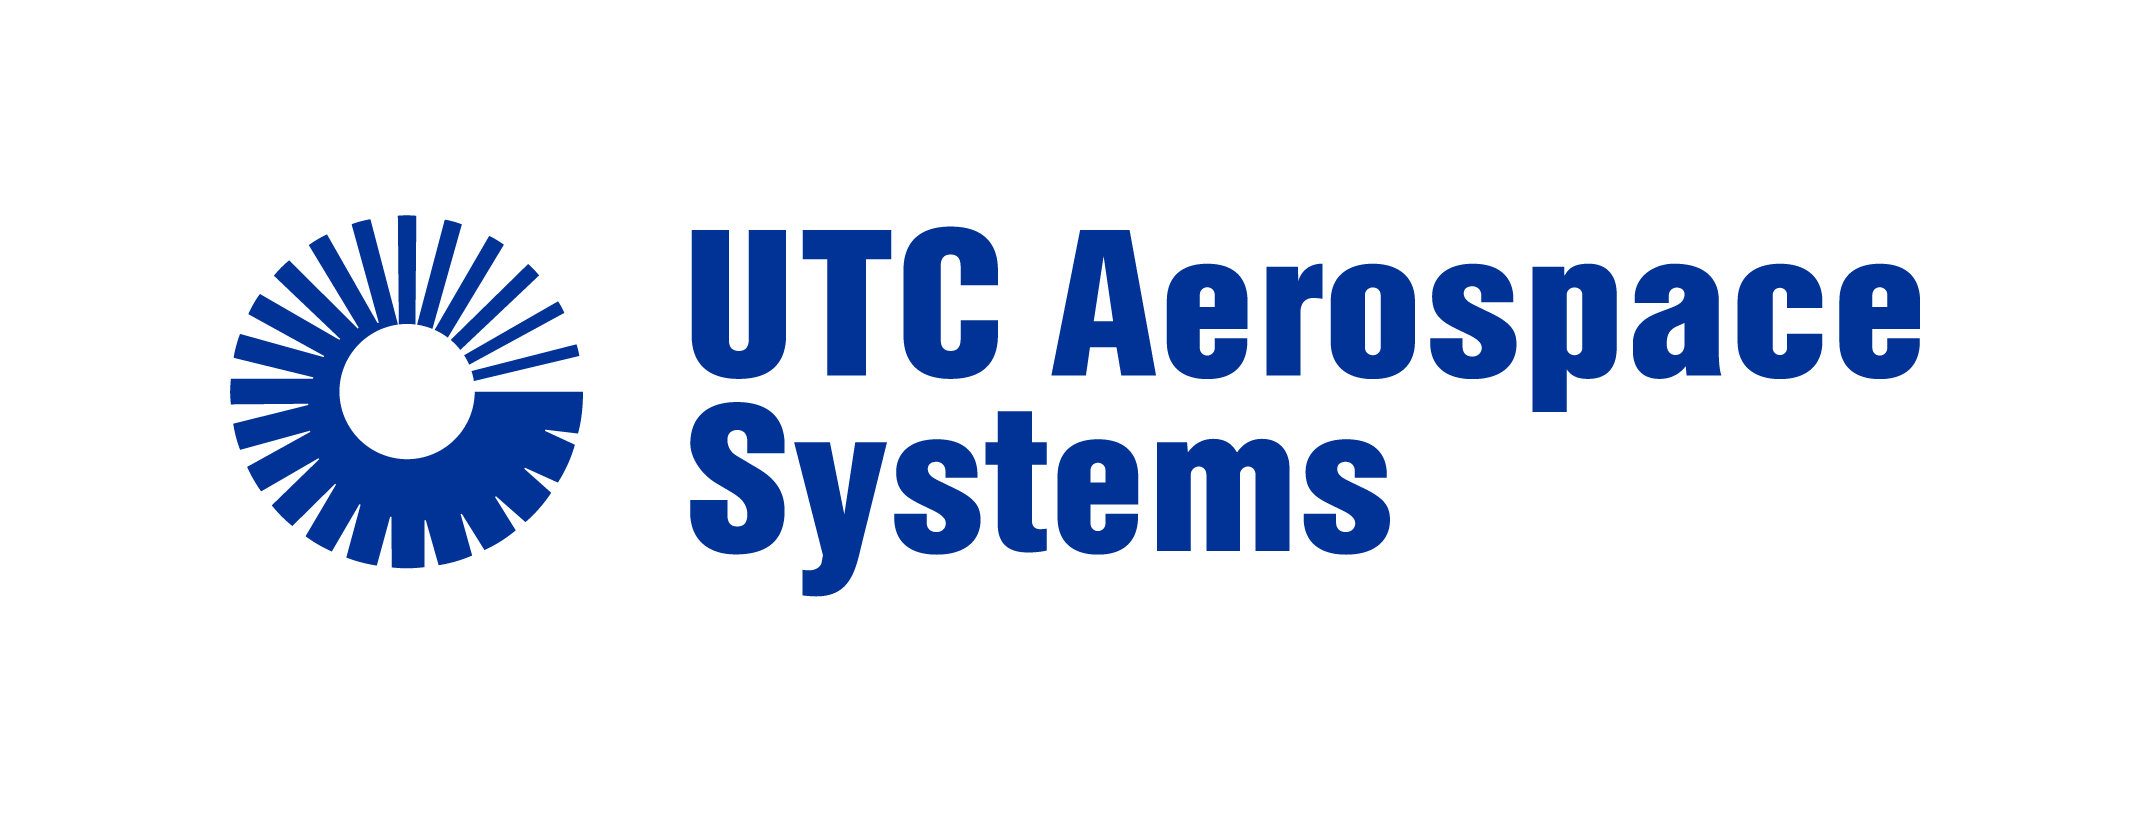 UTC Aerospace Systems Logo